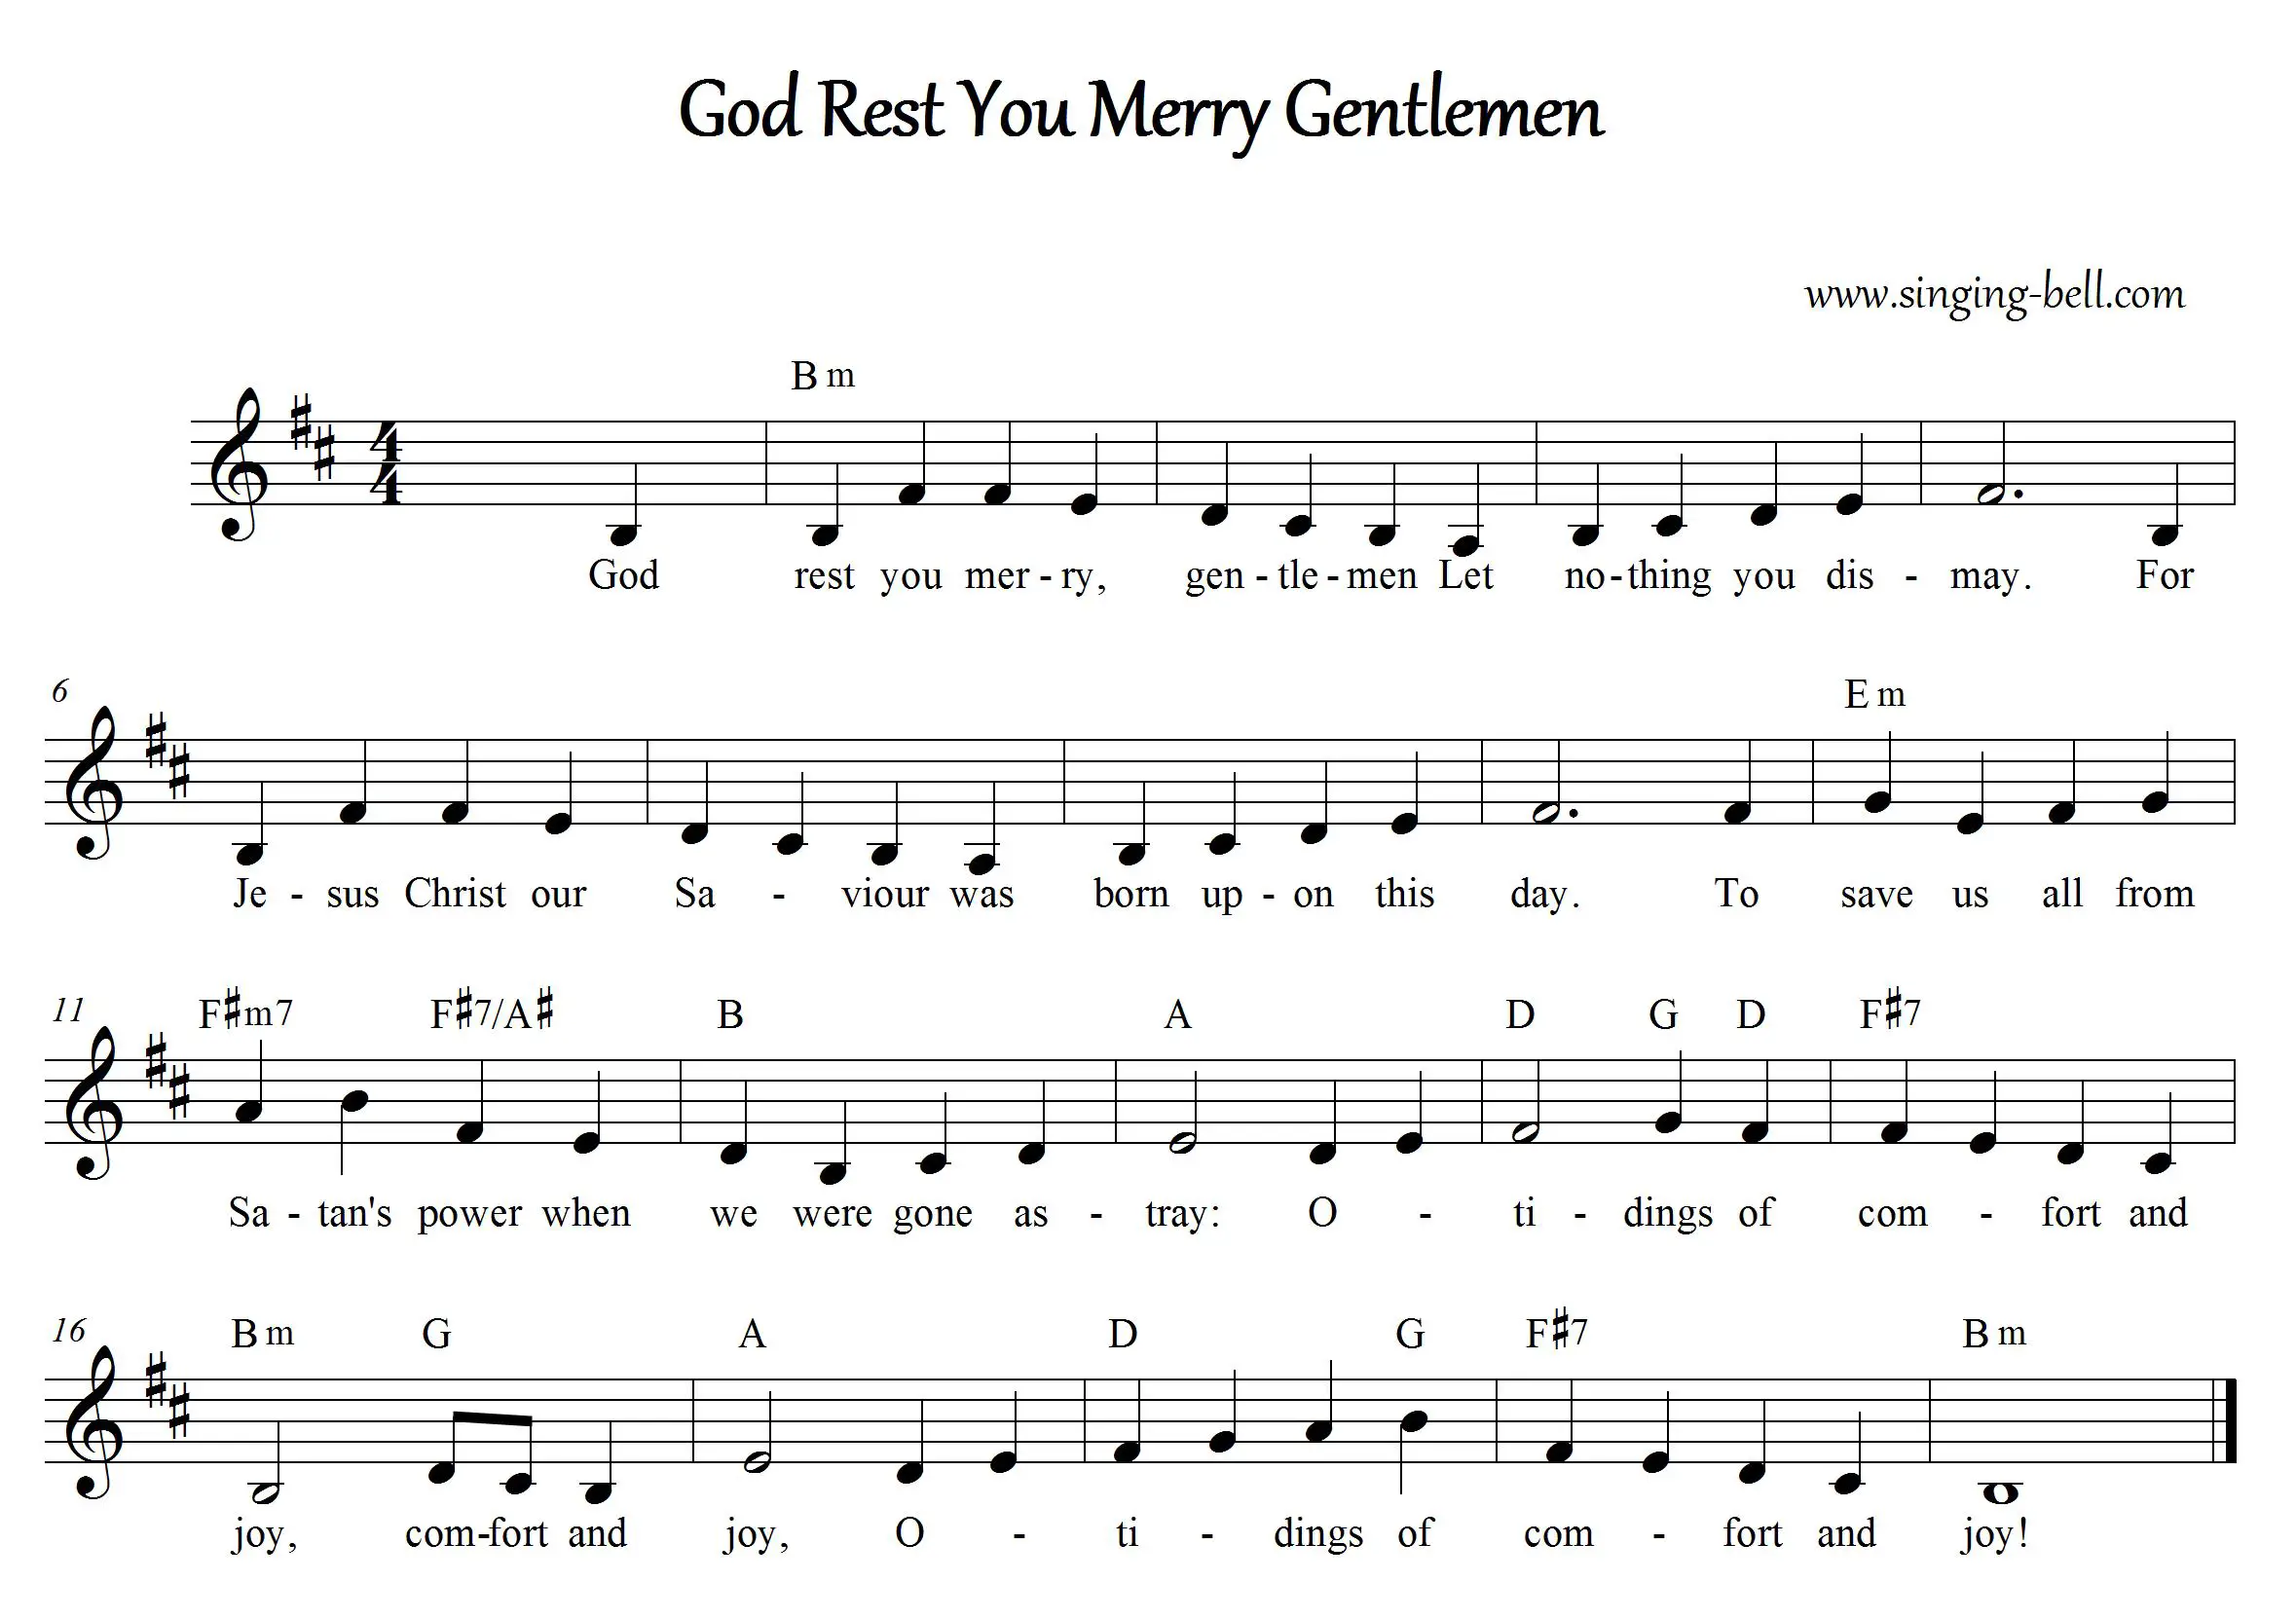 God Rest you merry Gentlemen Free Christmas Music Score Download (in Bm)